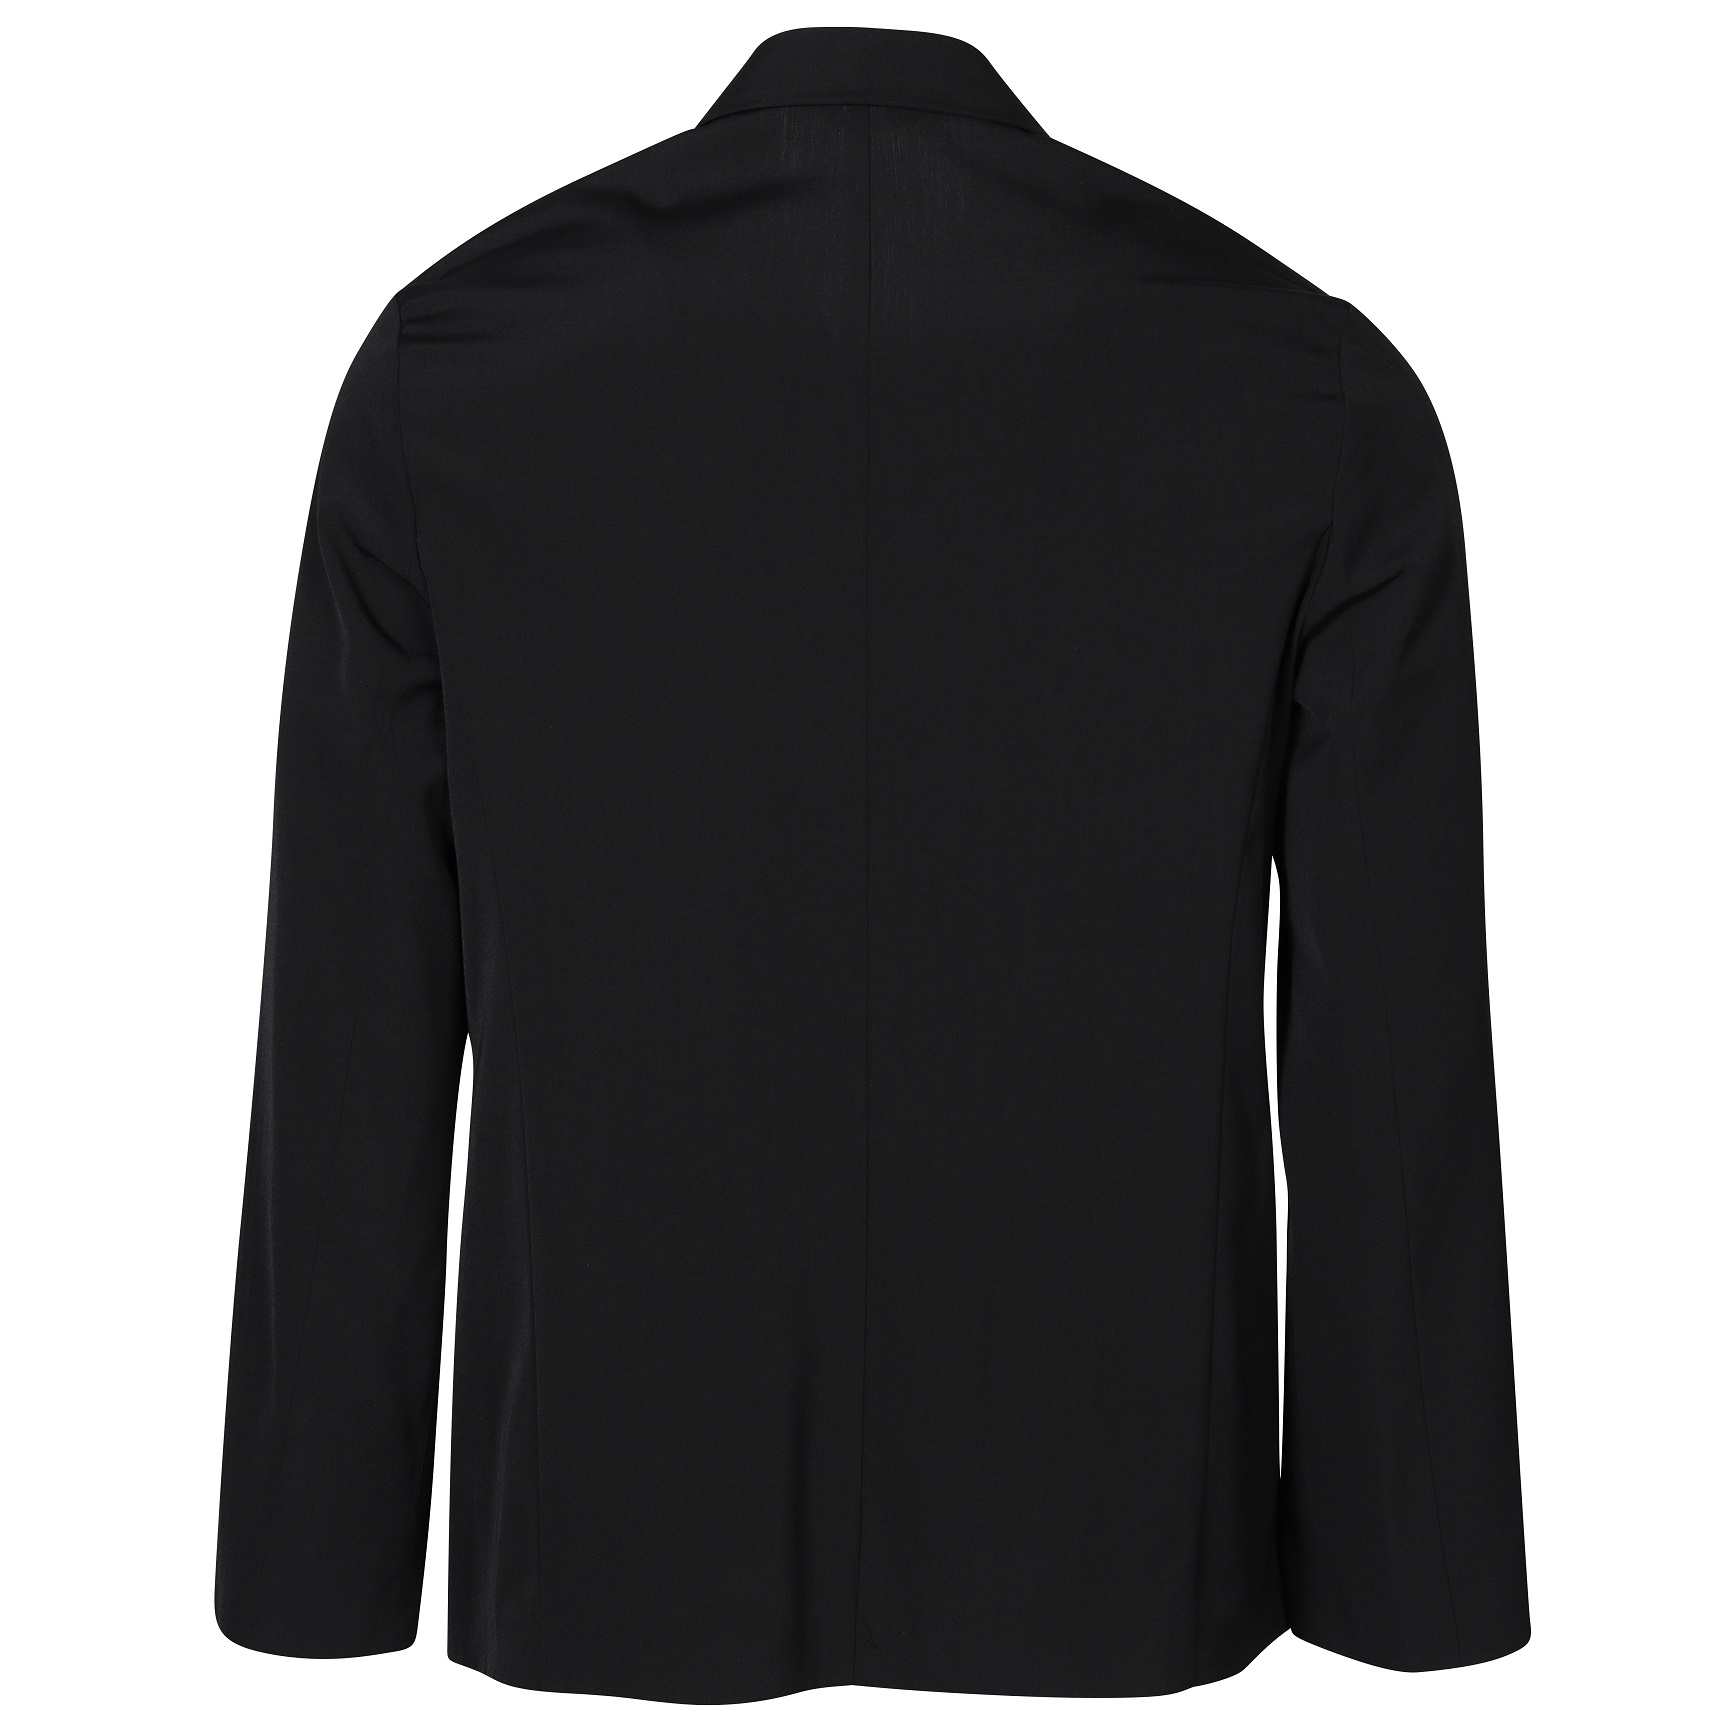 ACNE STUDIOS Suit Jacket in Black 46